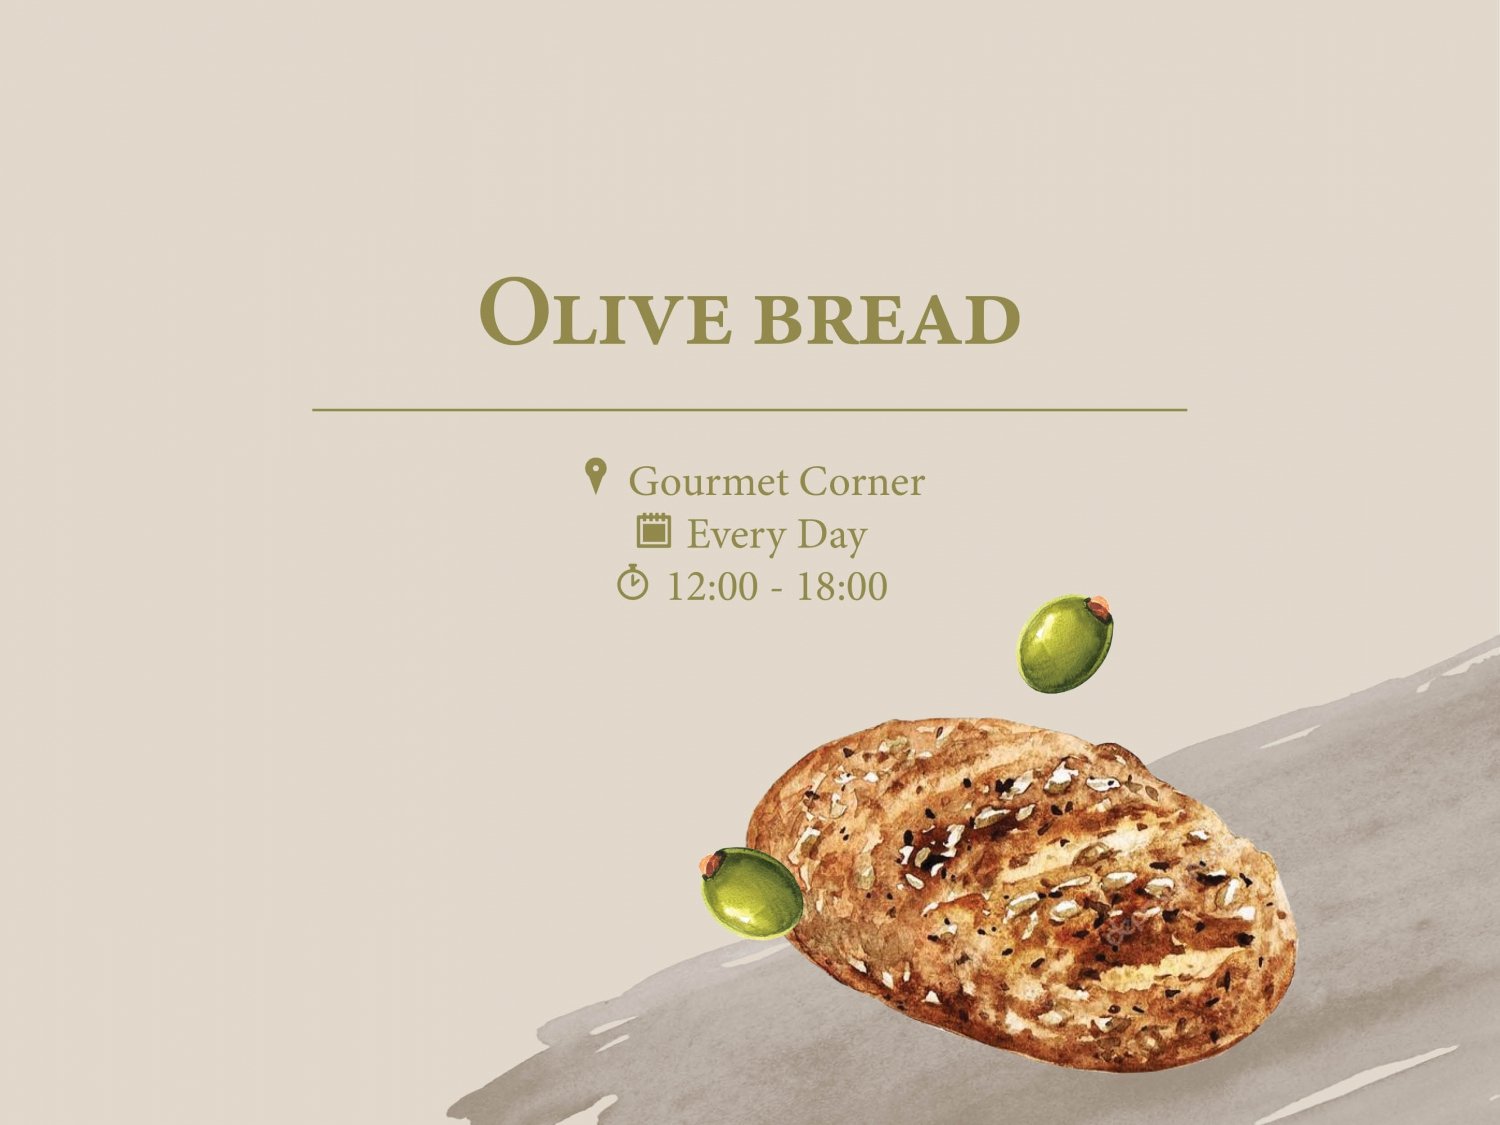 Olive Bread at Gourmet Corner